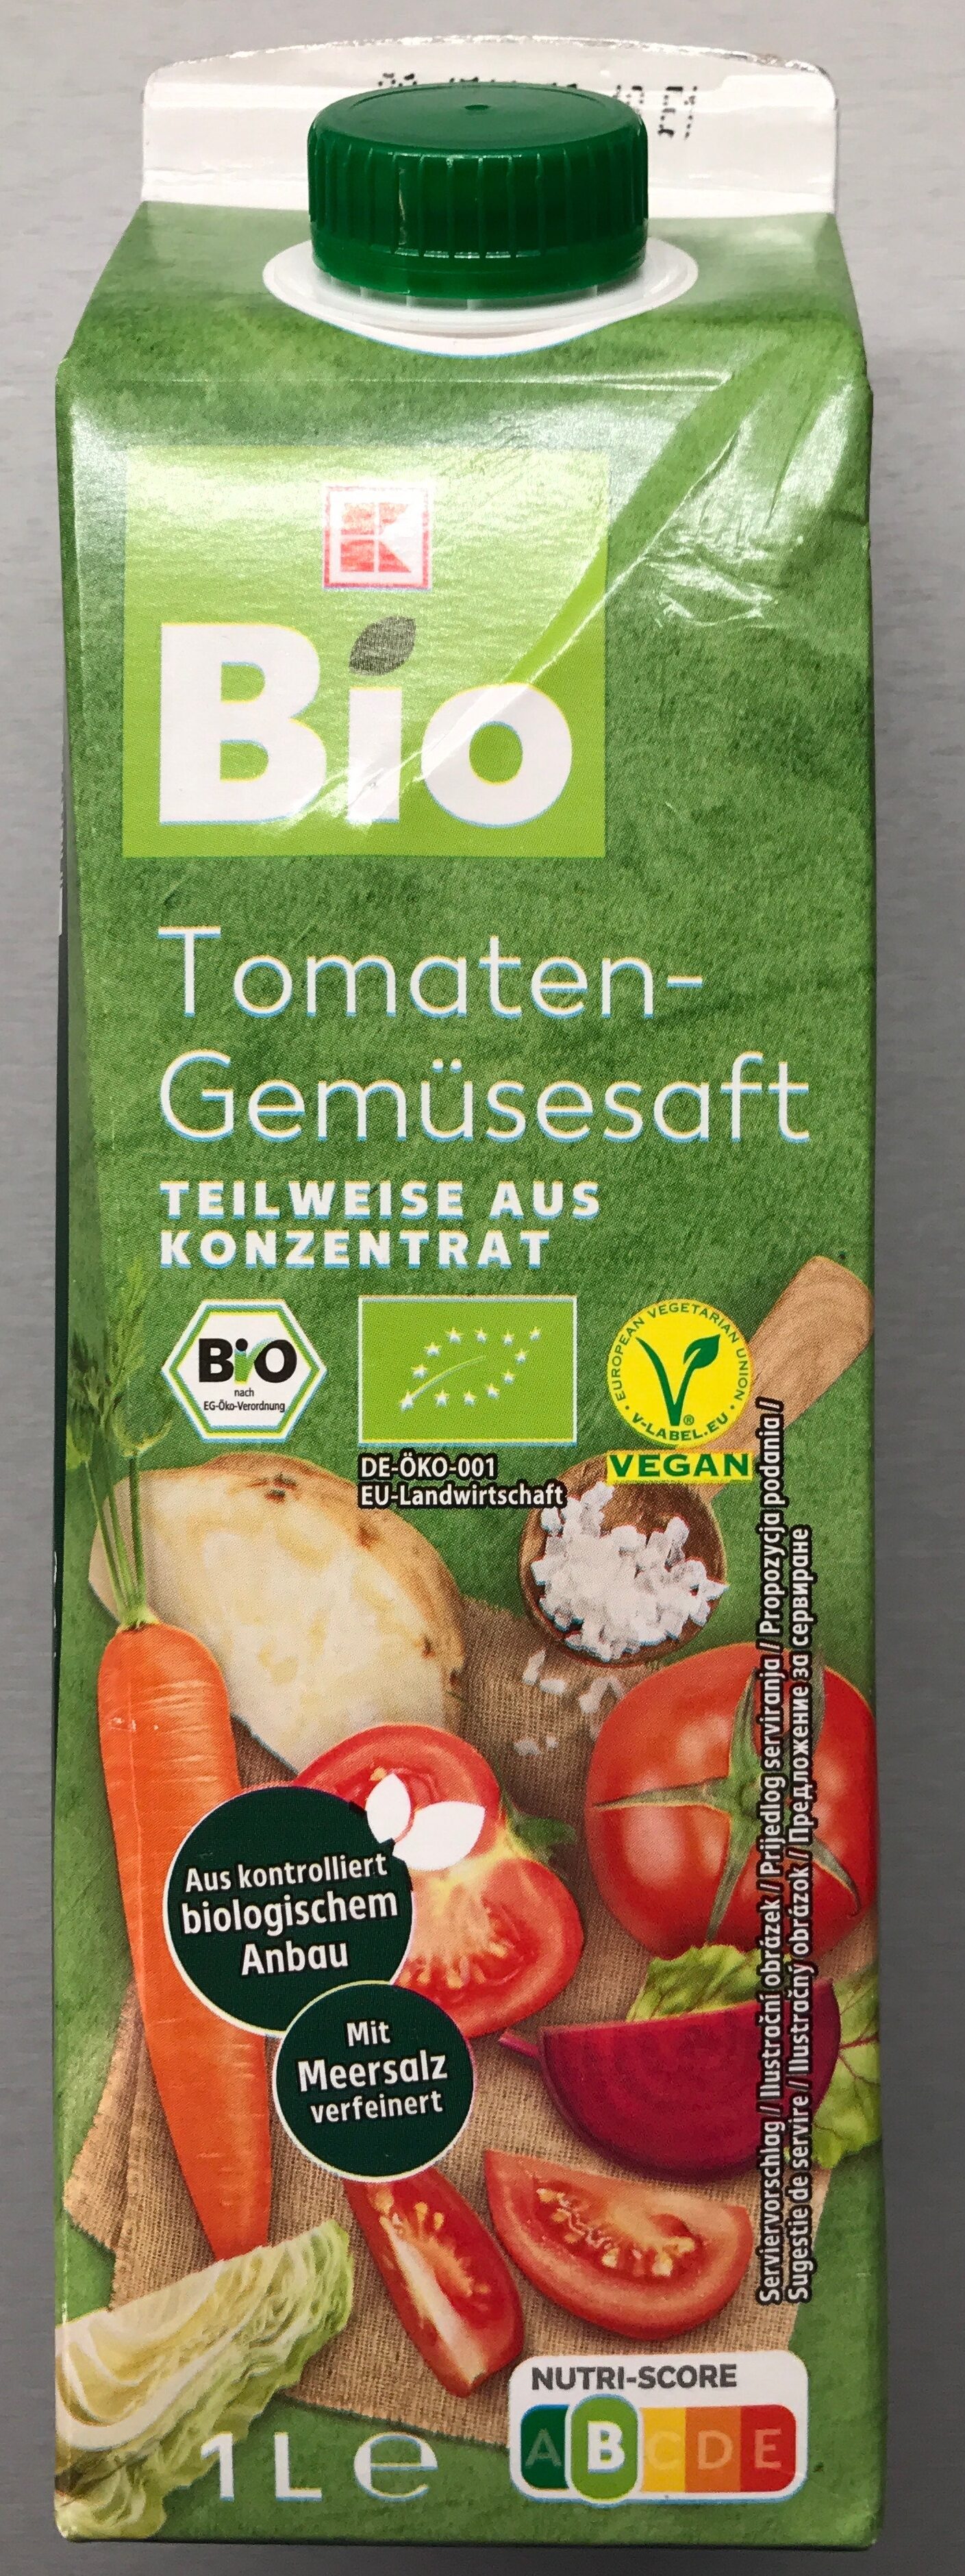 Tomateb-Gemüsesaft - Produkt - de